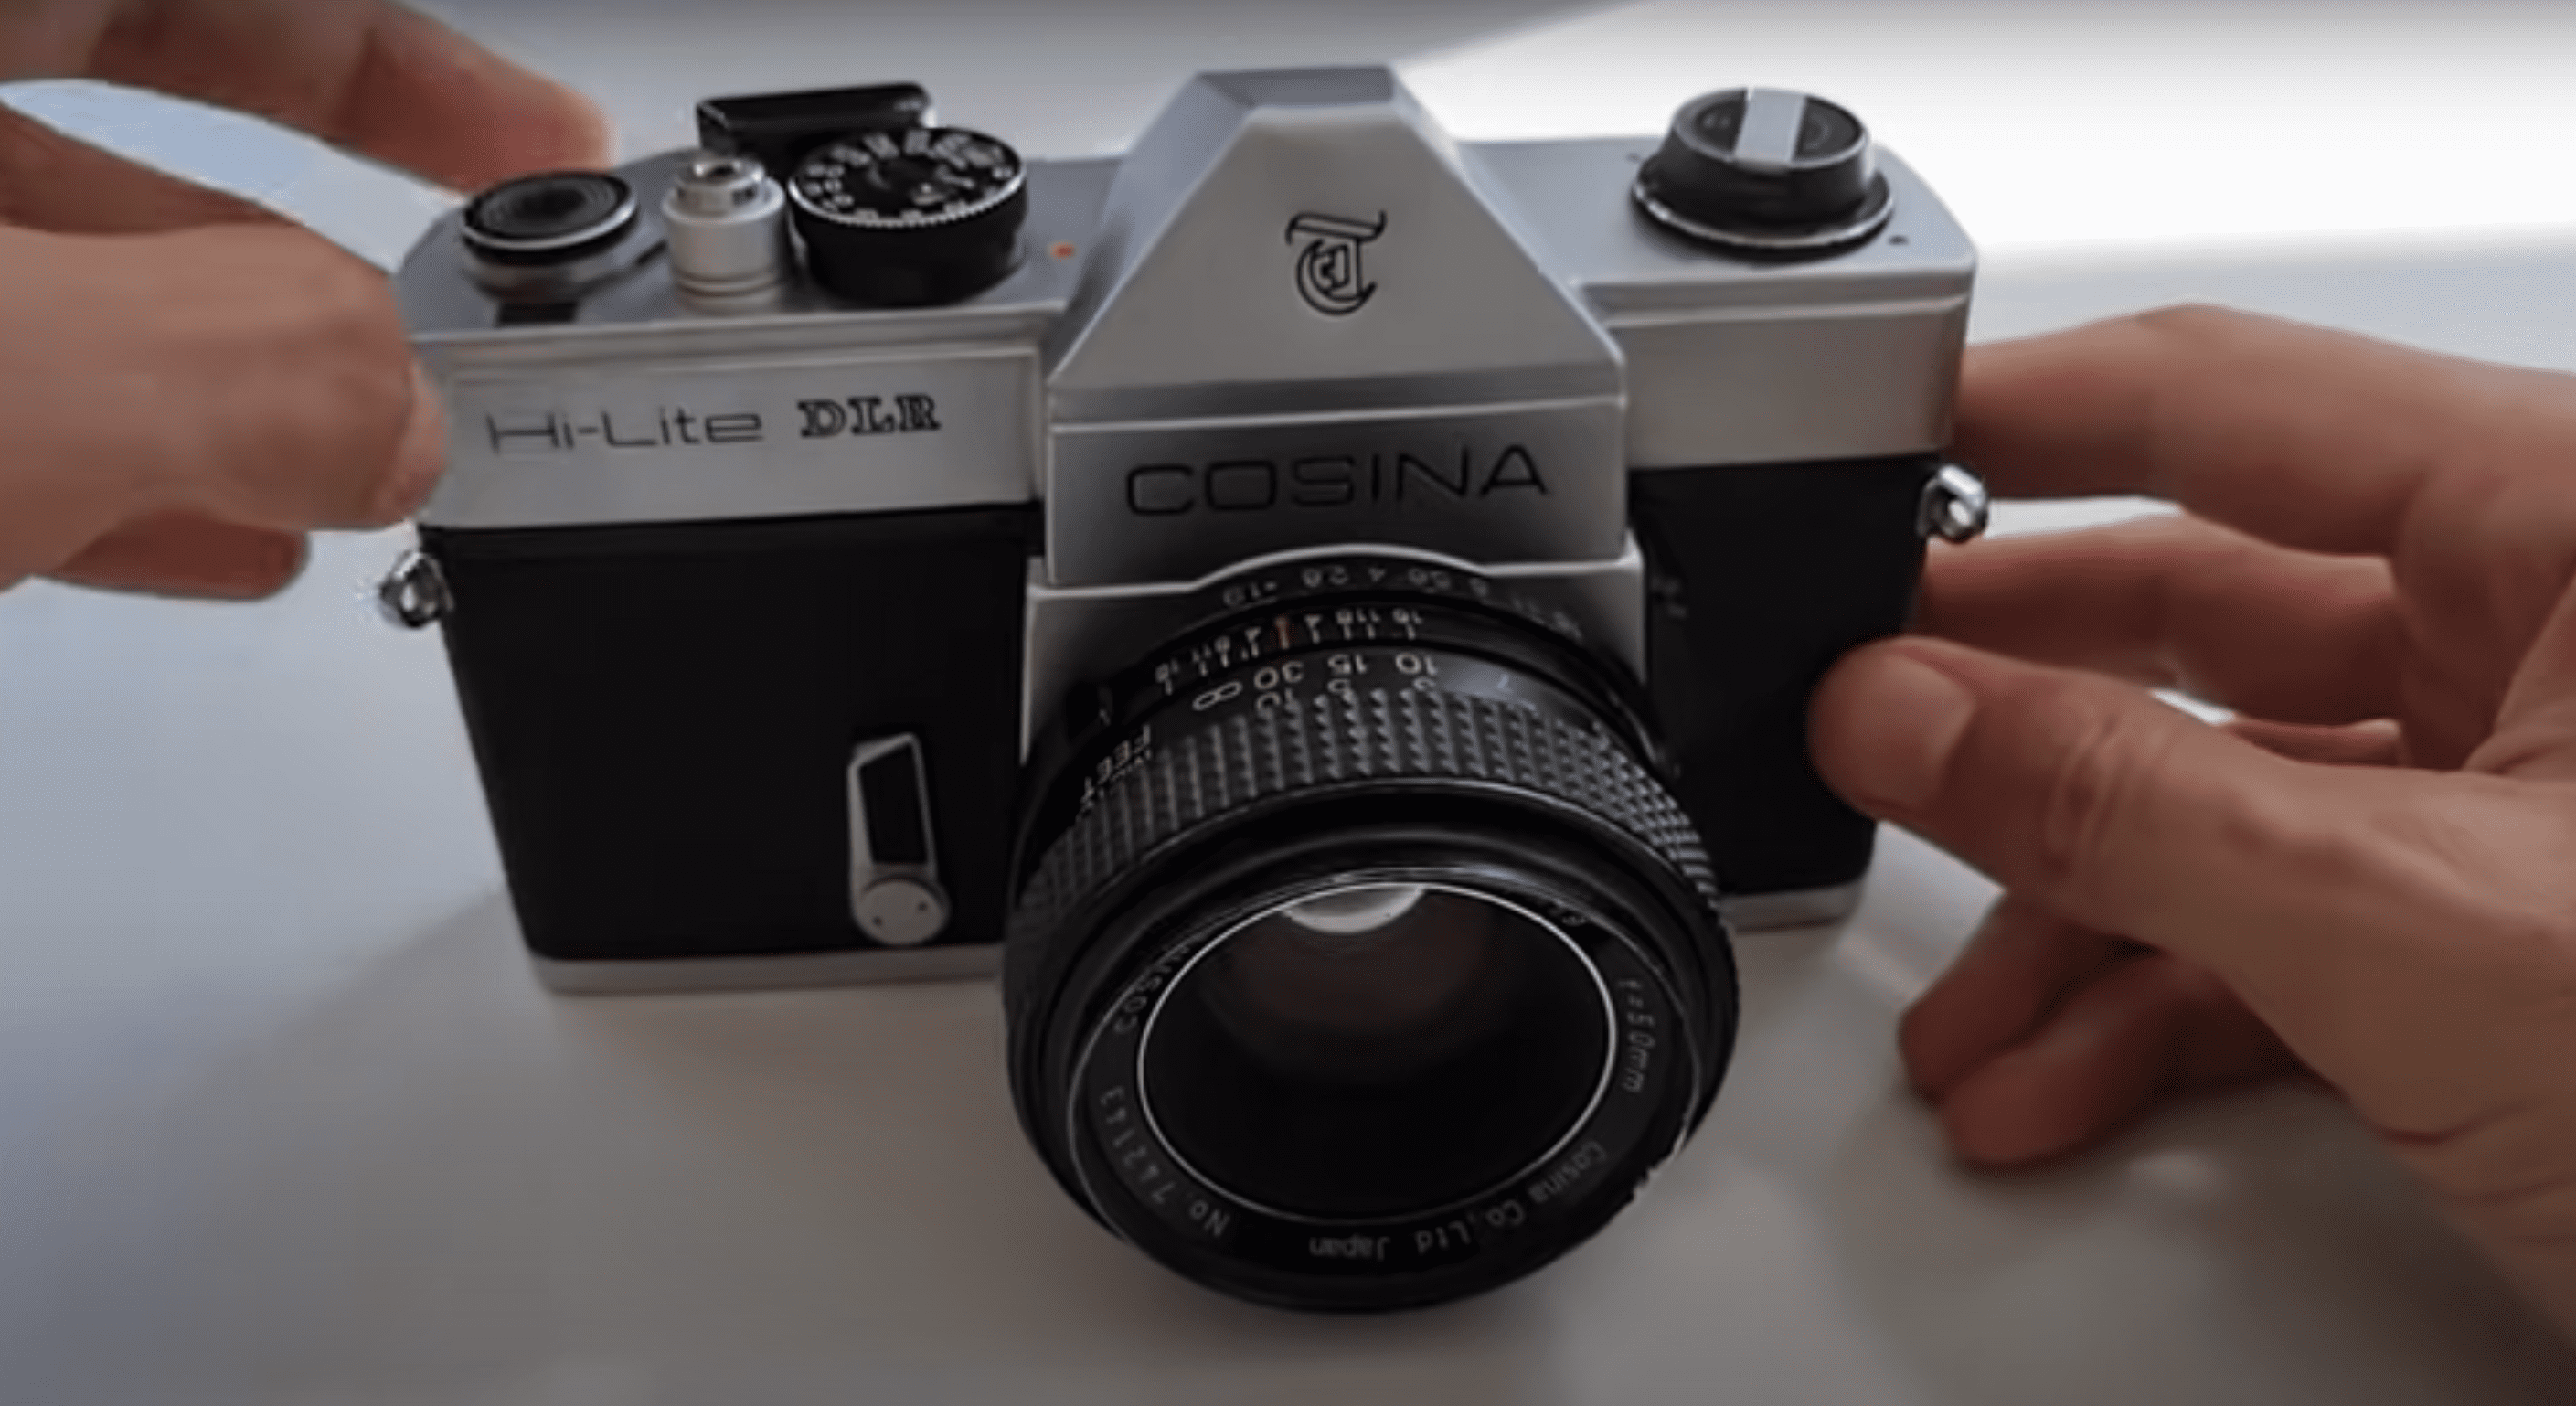 analogue to digital camera original model hero shot